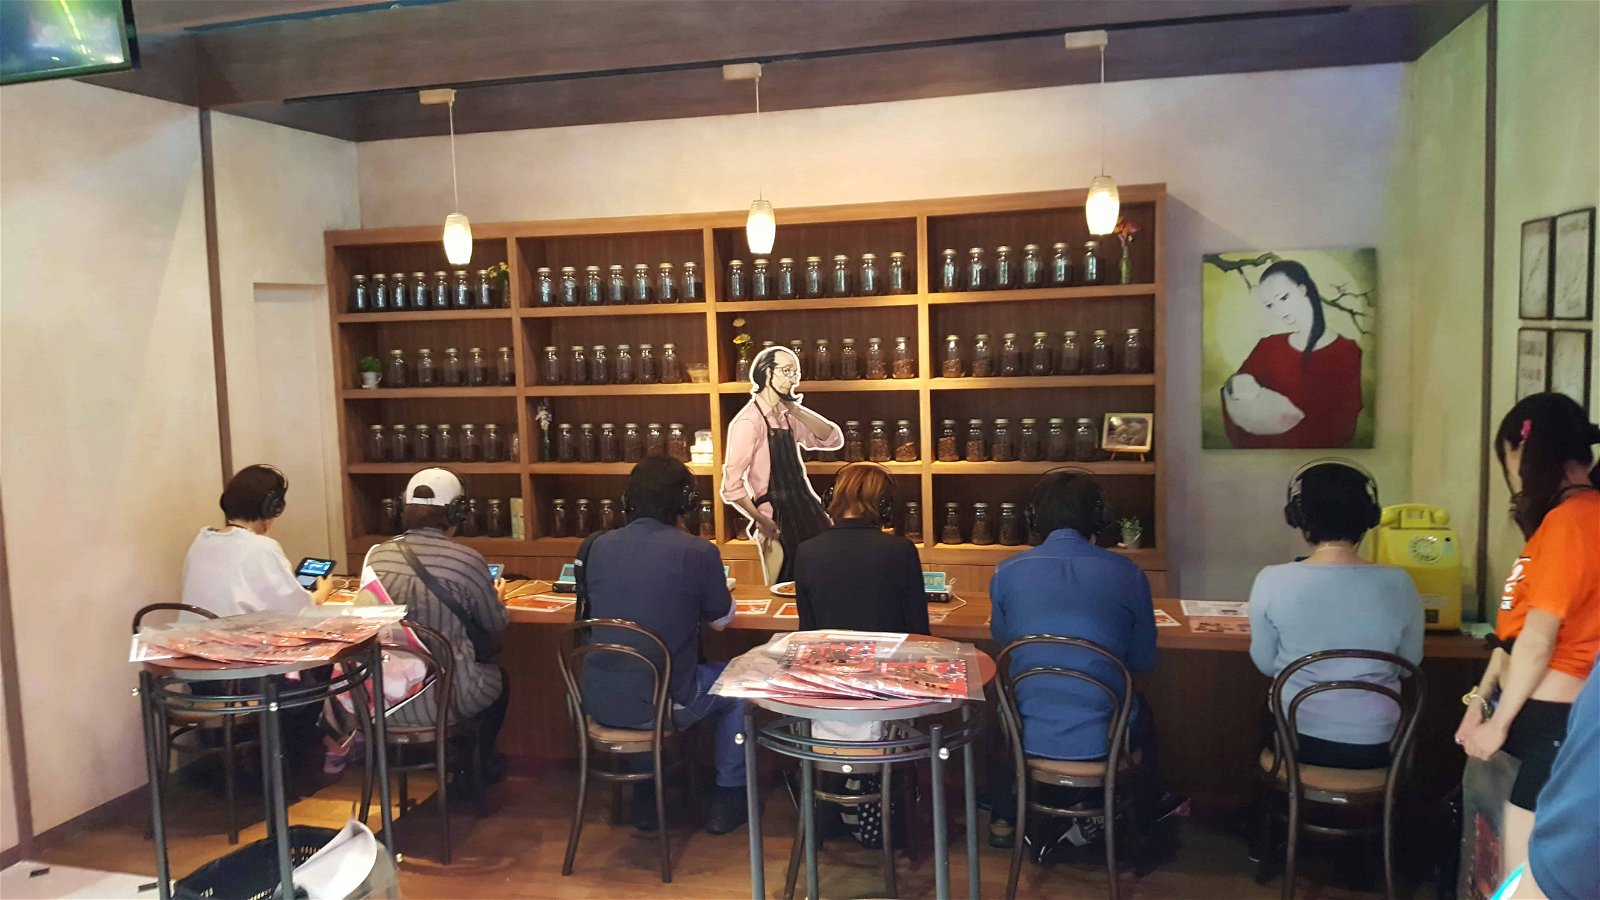 Persona 5 Cafe At Tgs 2018